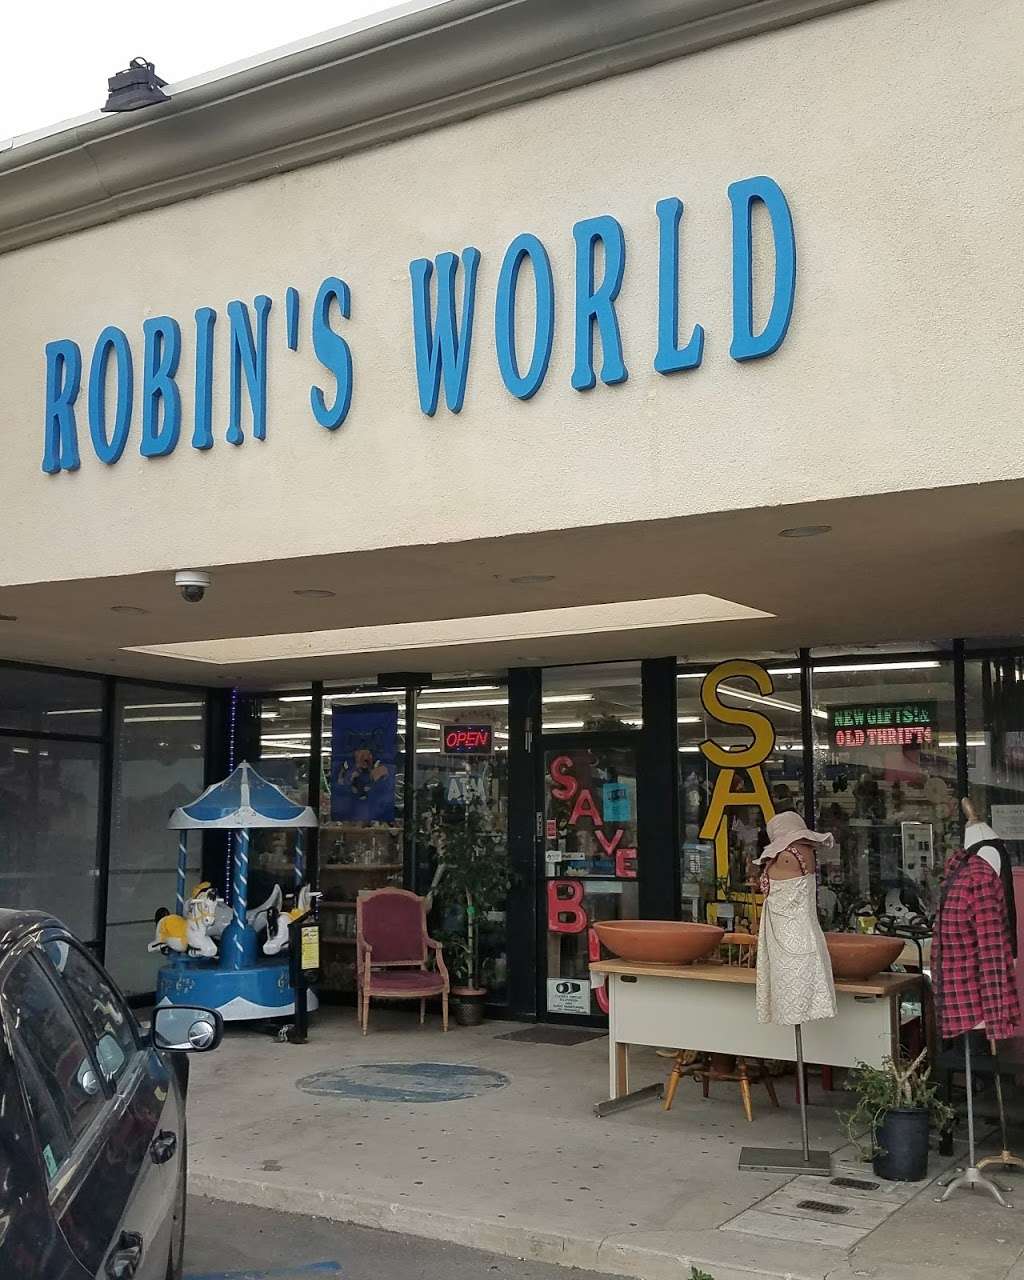 Robins world